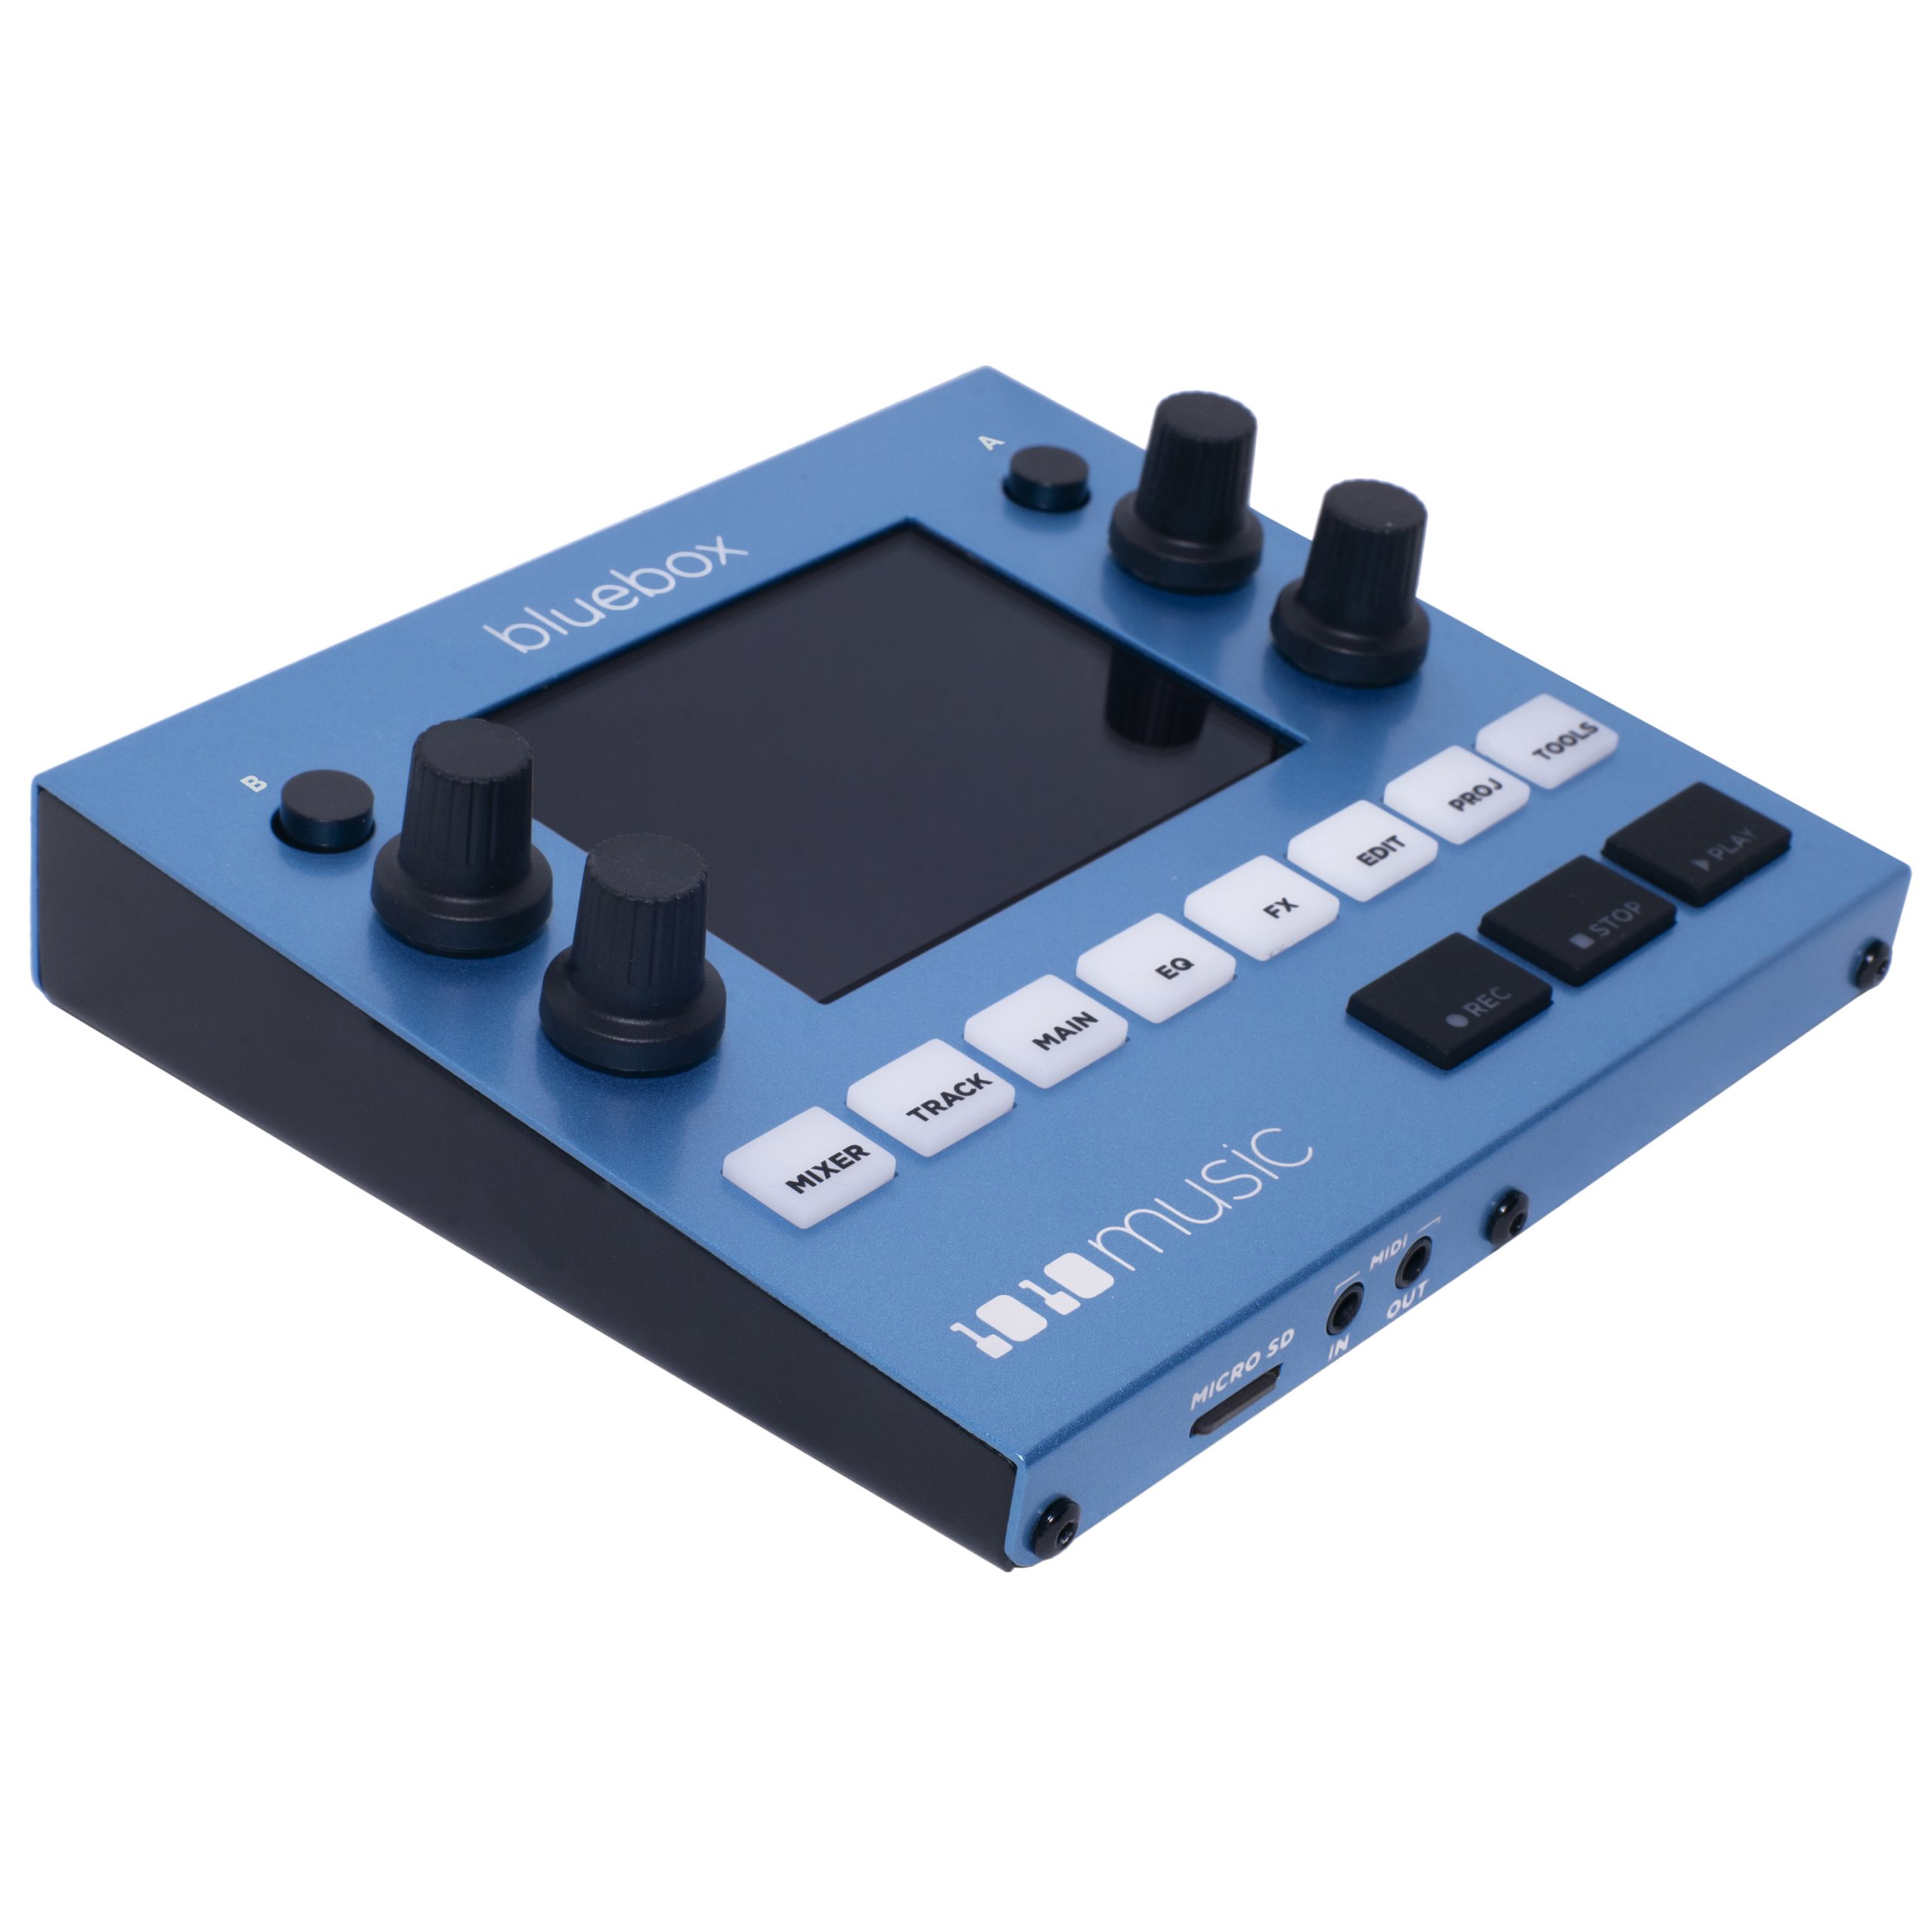 1010Music Bluebox по цене 47 740 ₽